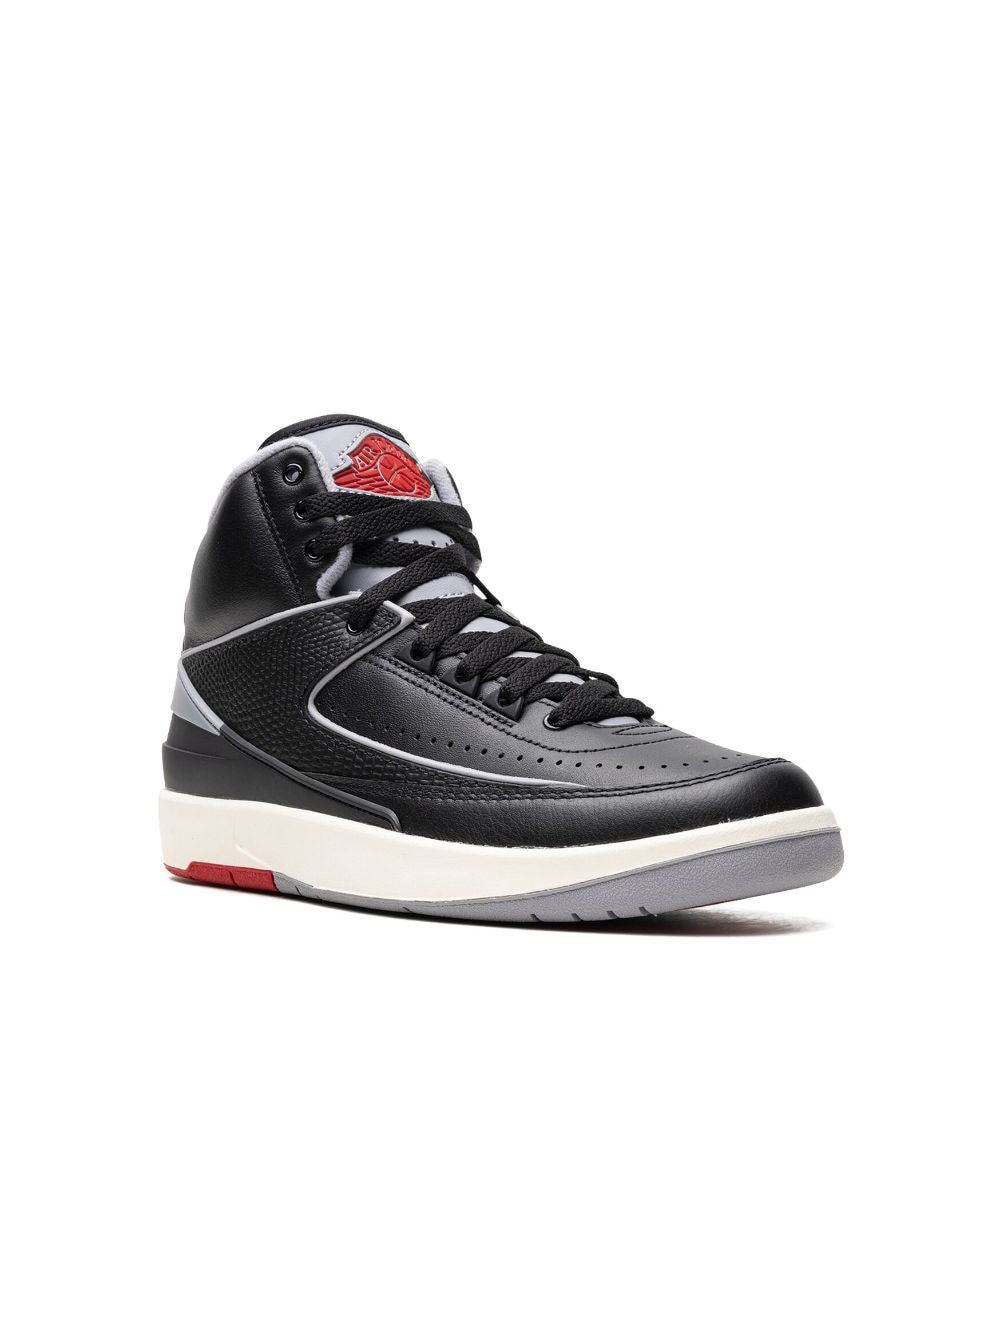 Jordan Kids Air Jordan 2 Black Cement Sneakers - Schwarz von Jordan Kids